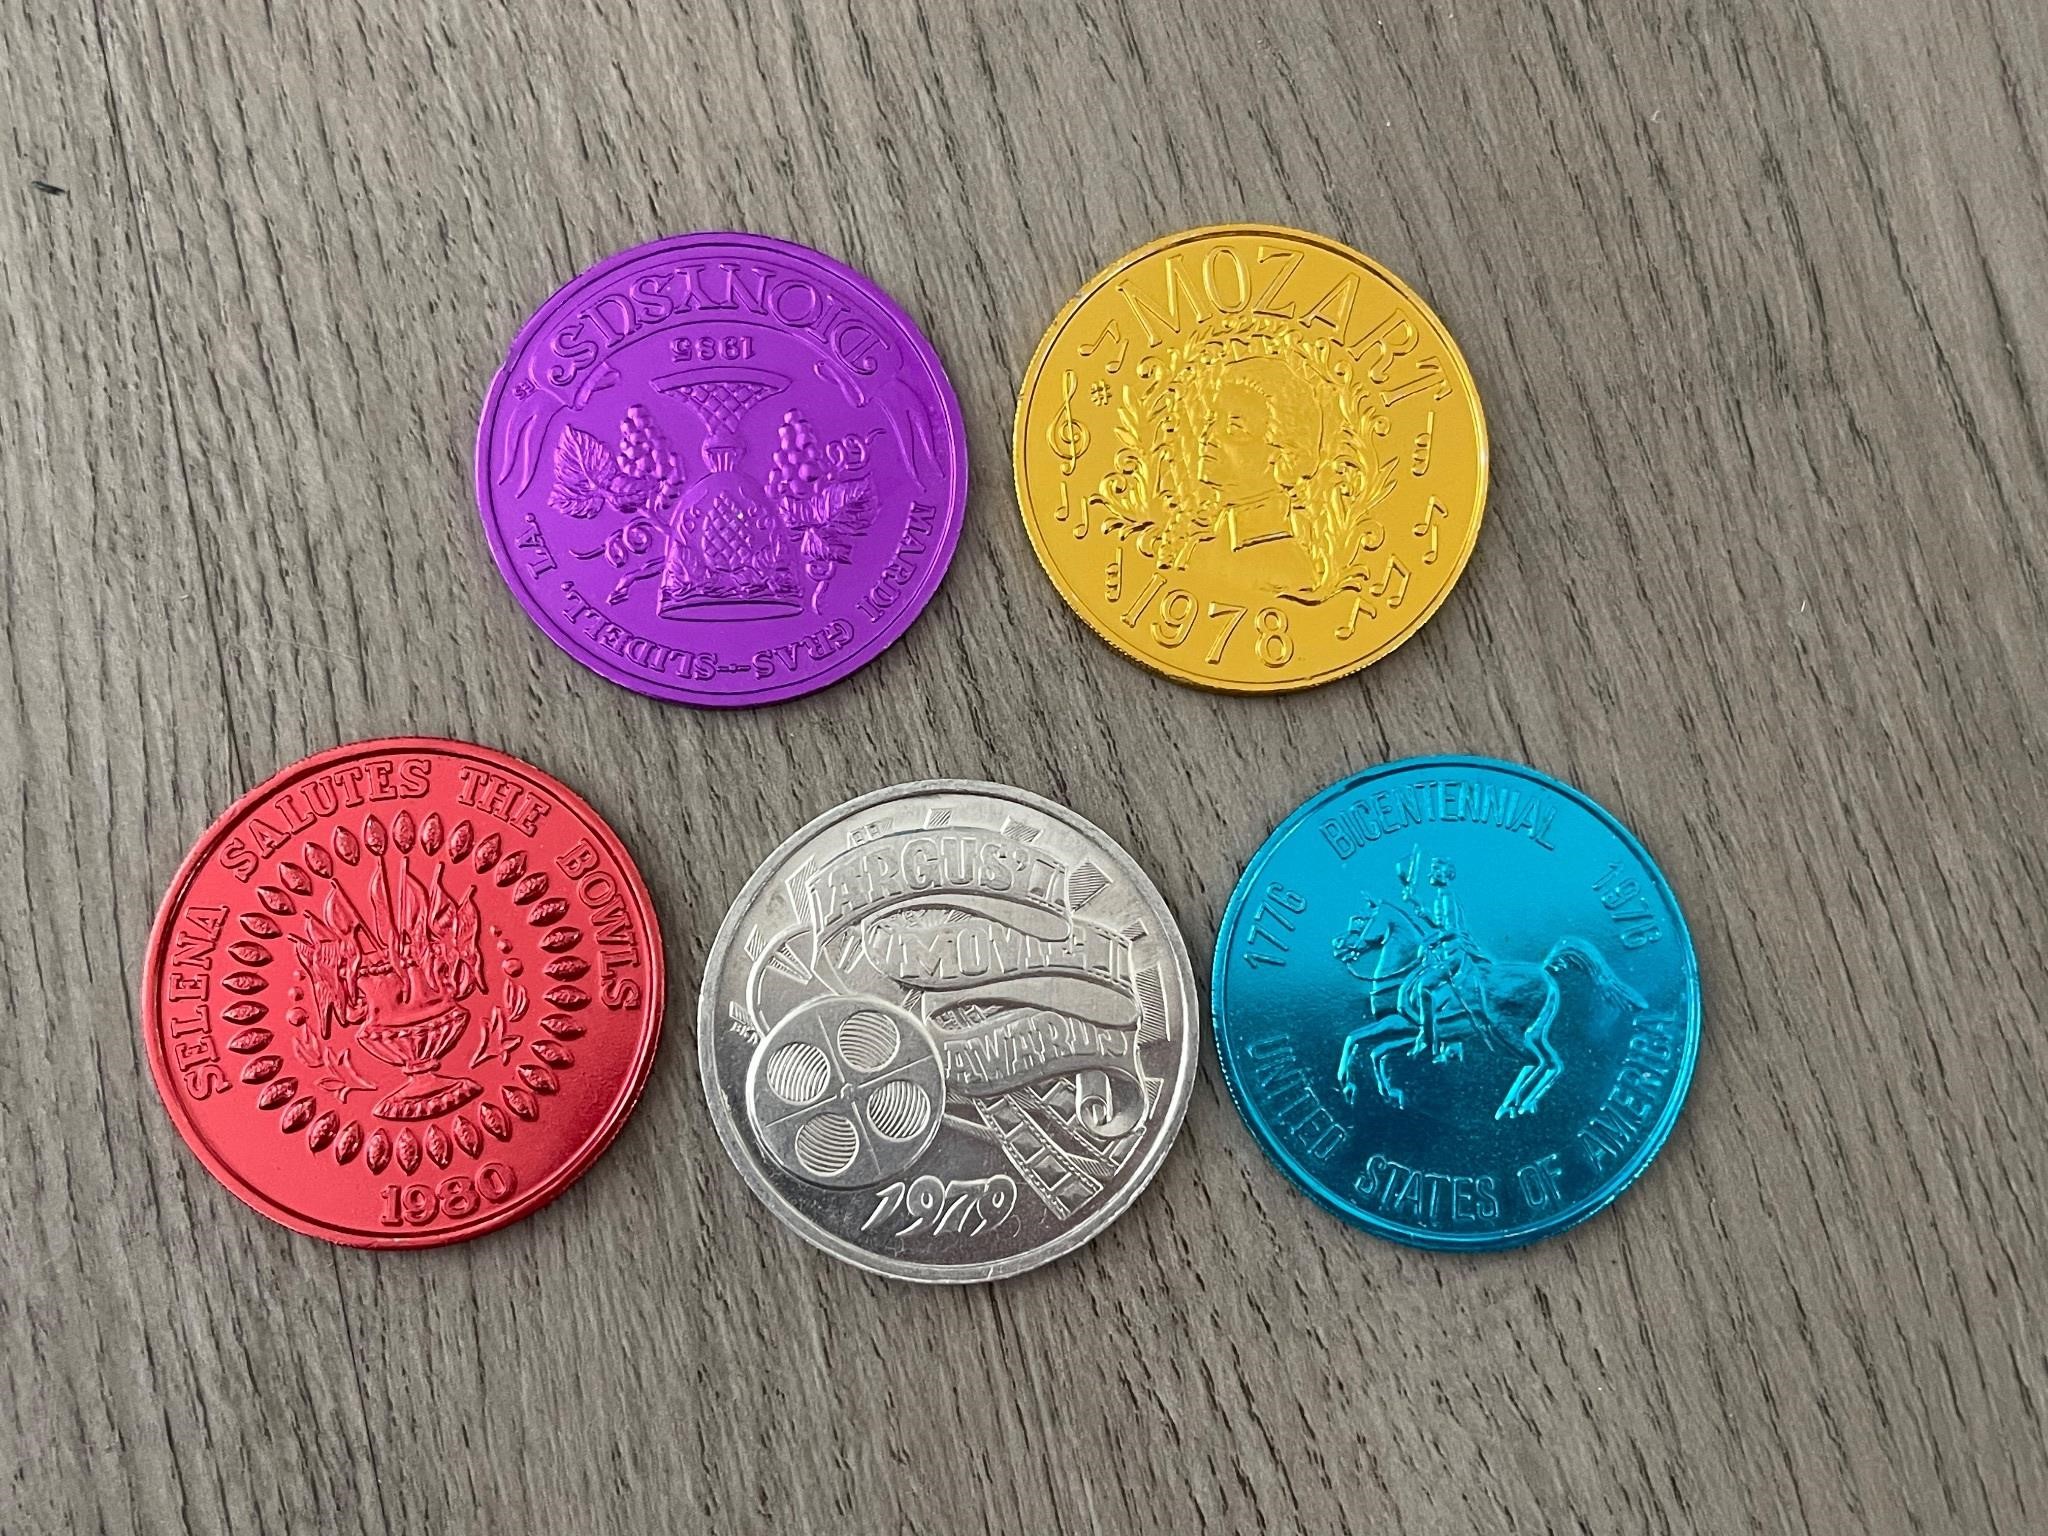 Vintage 70’s 80’s New Orleans Mardi Gars Coins